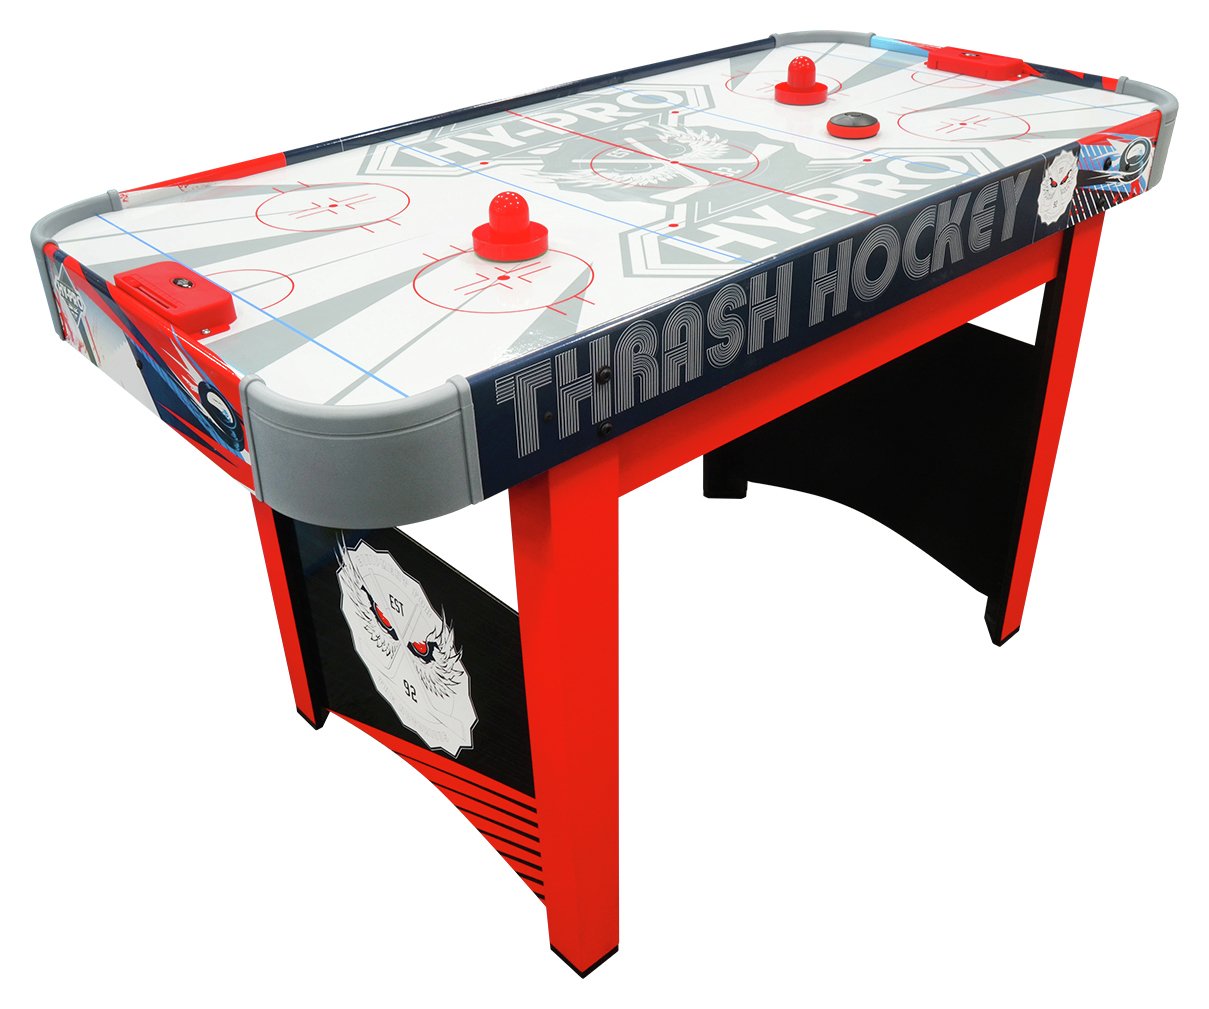 Hy-Pro Thrash 4ft Air Hockey Table